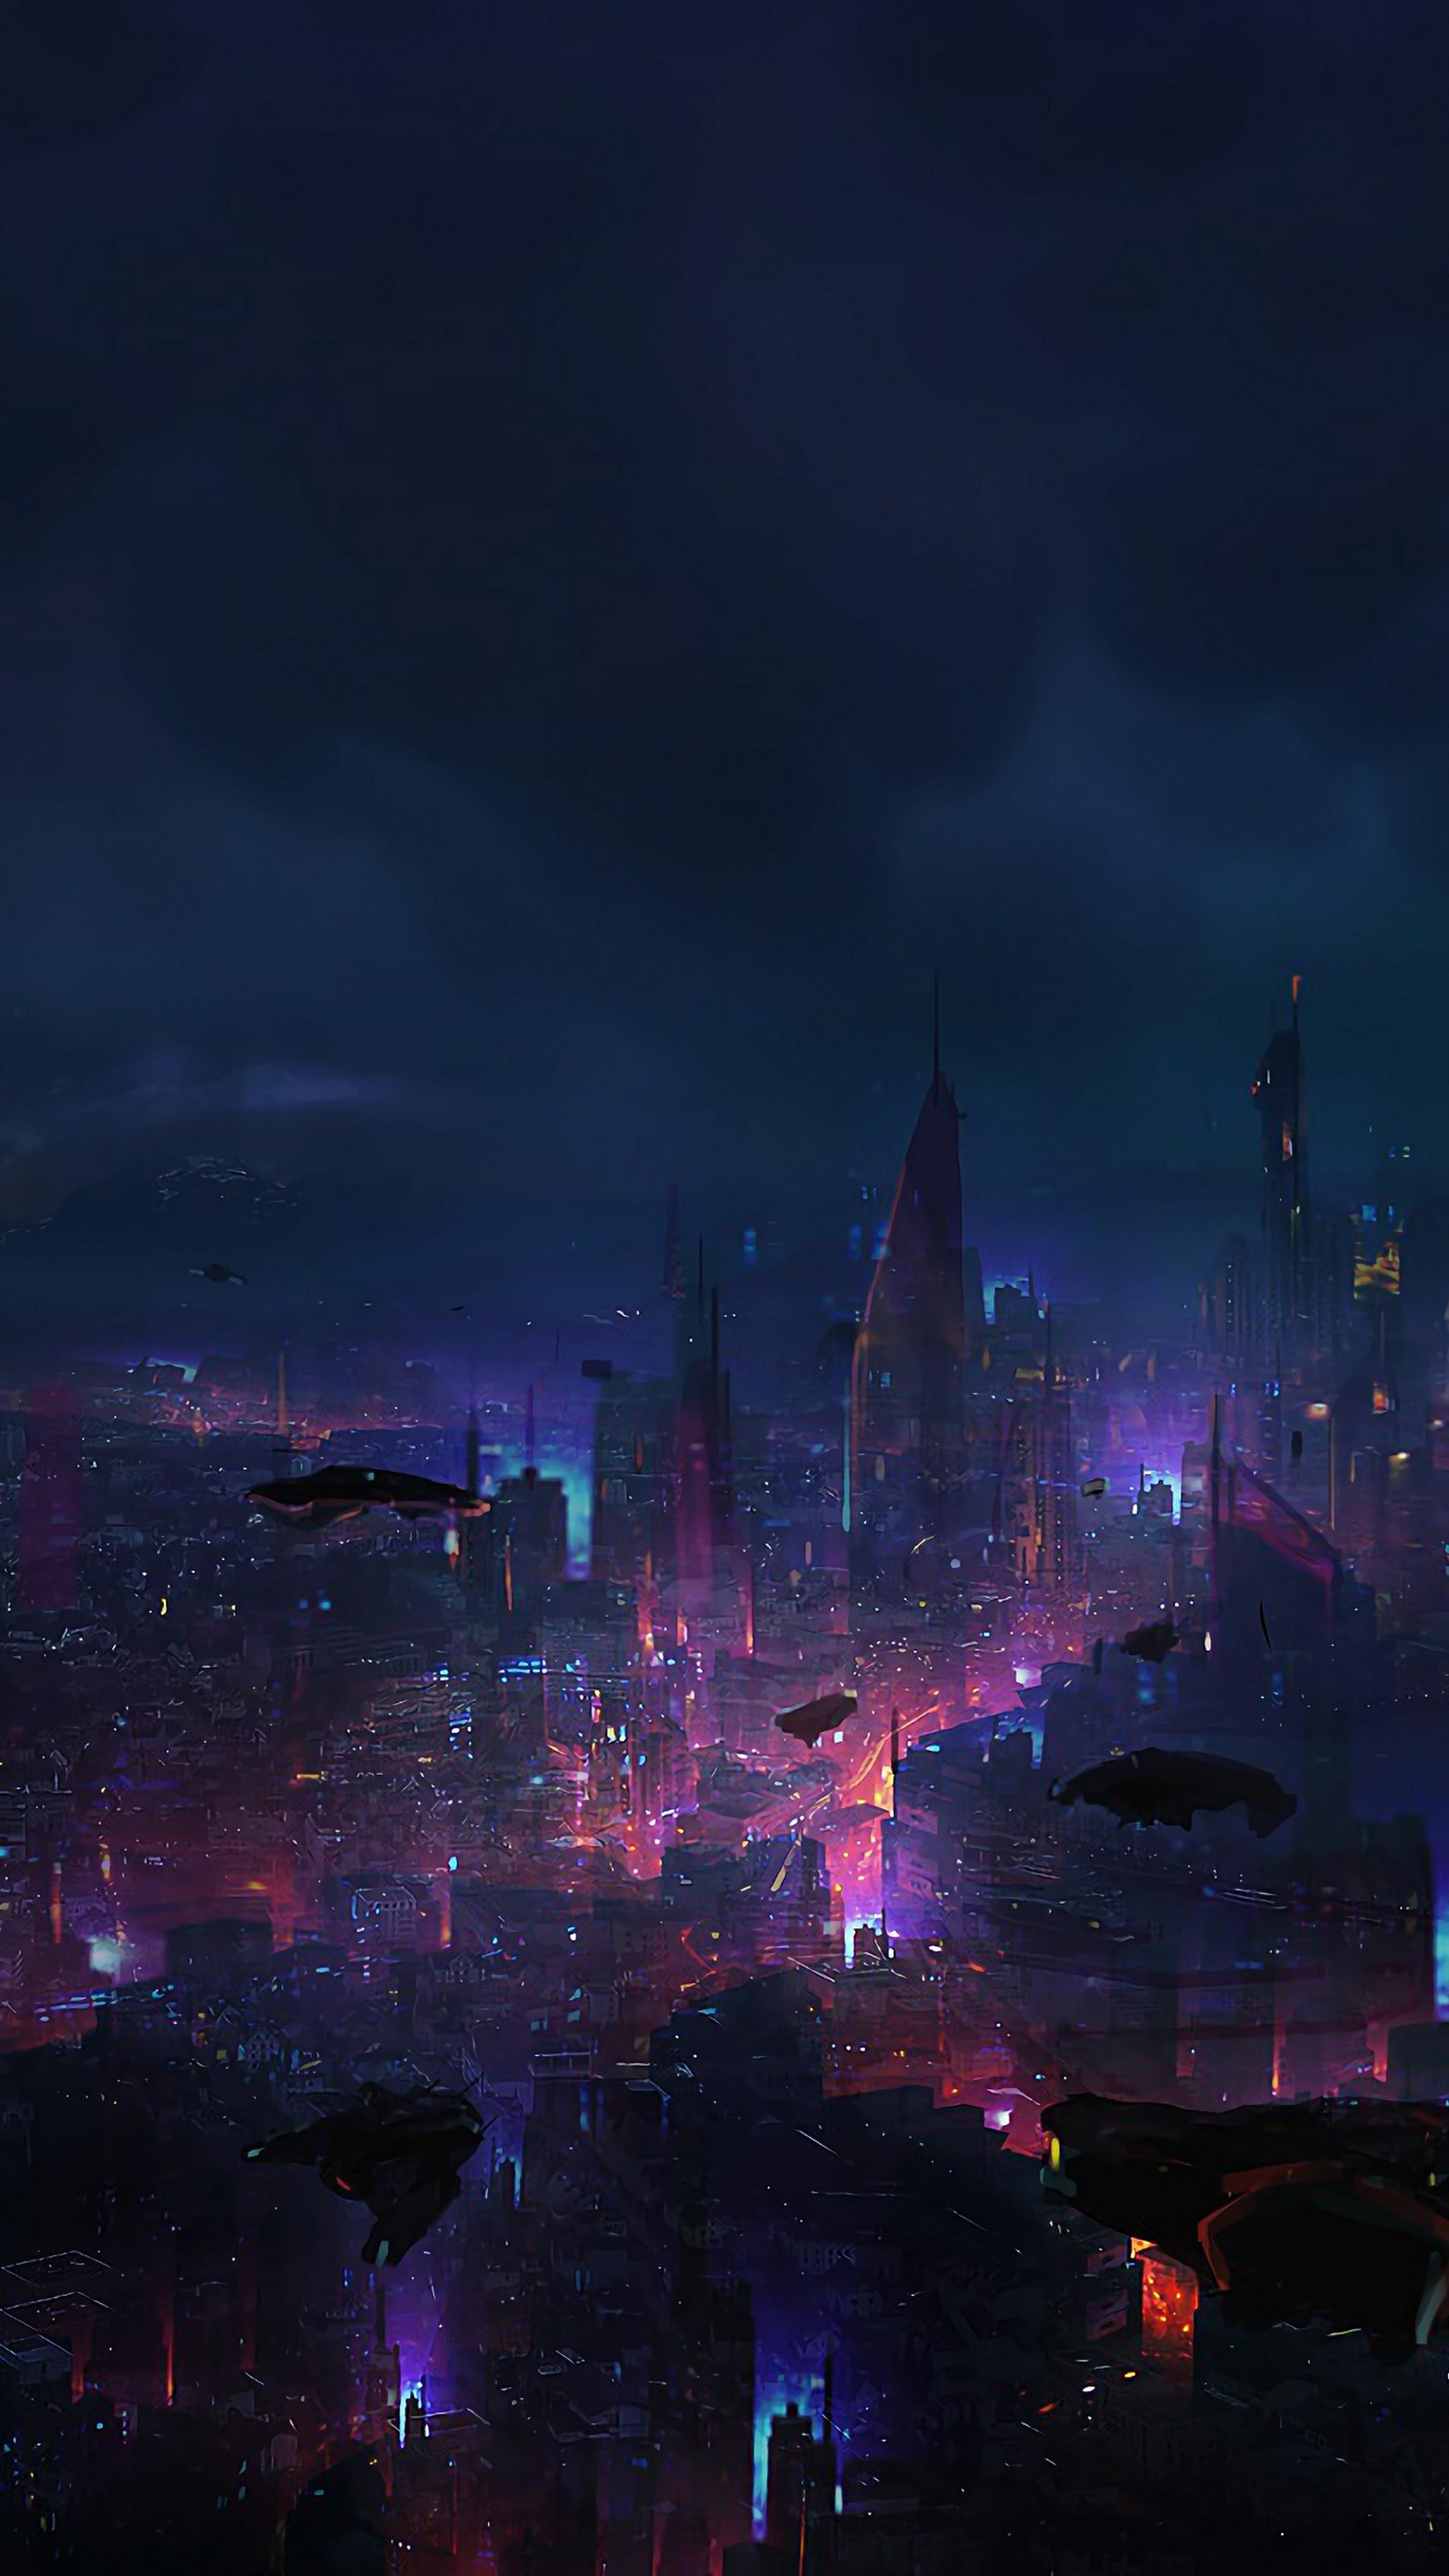 Cyberpunk City Night Scenery Sci Fi 4K Wallpaper